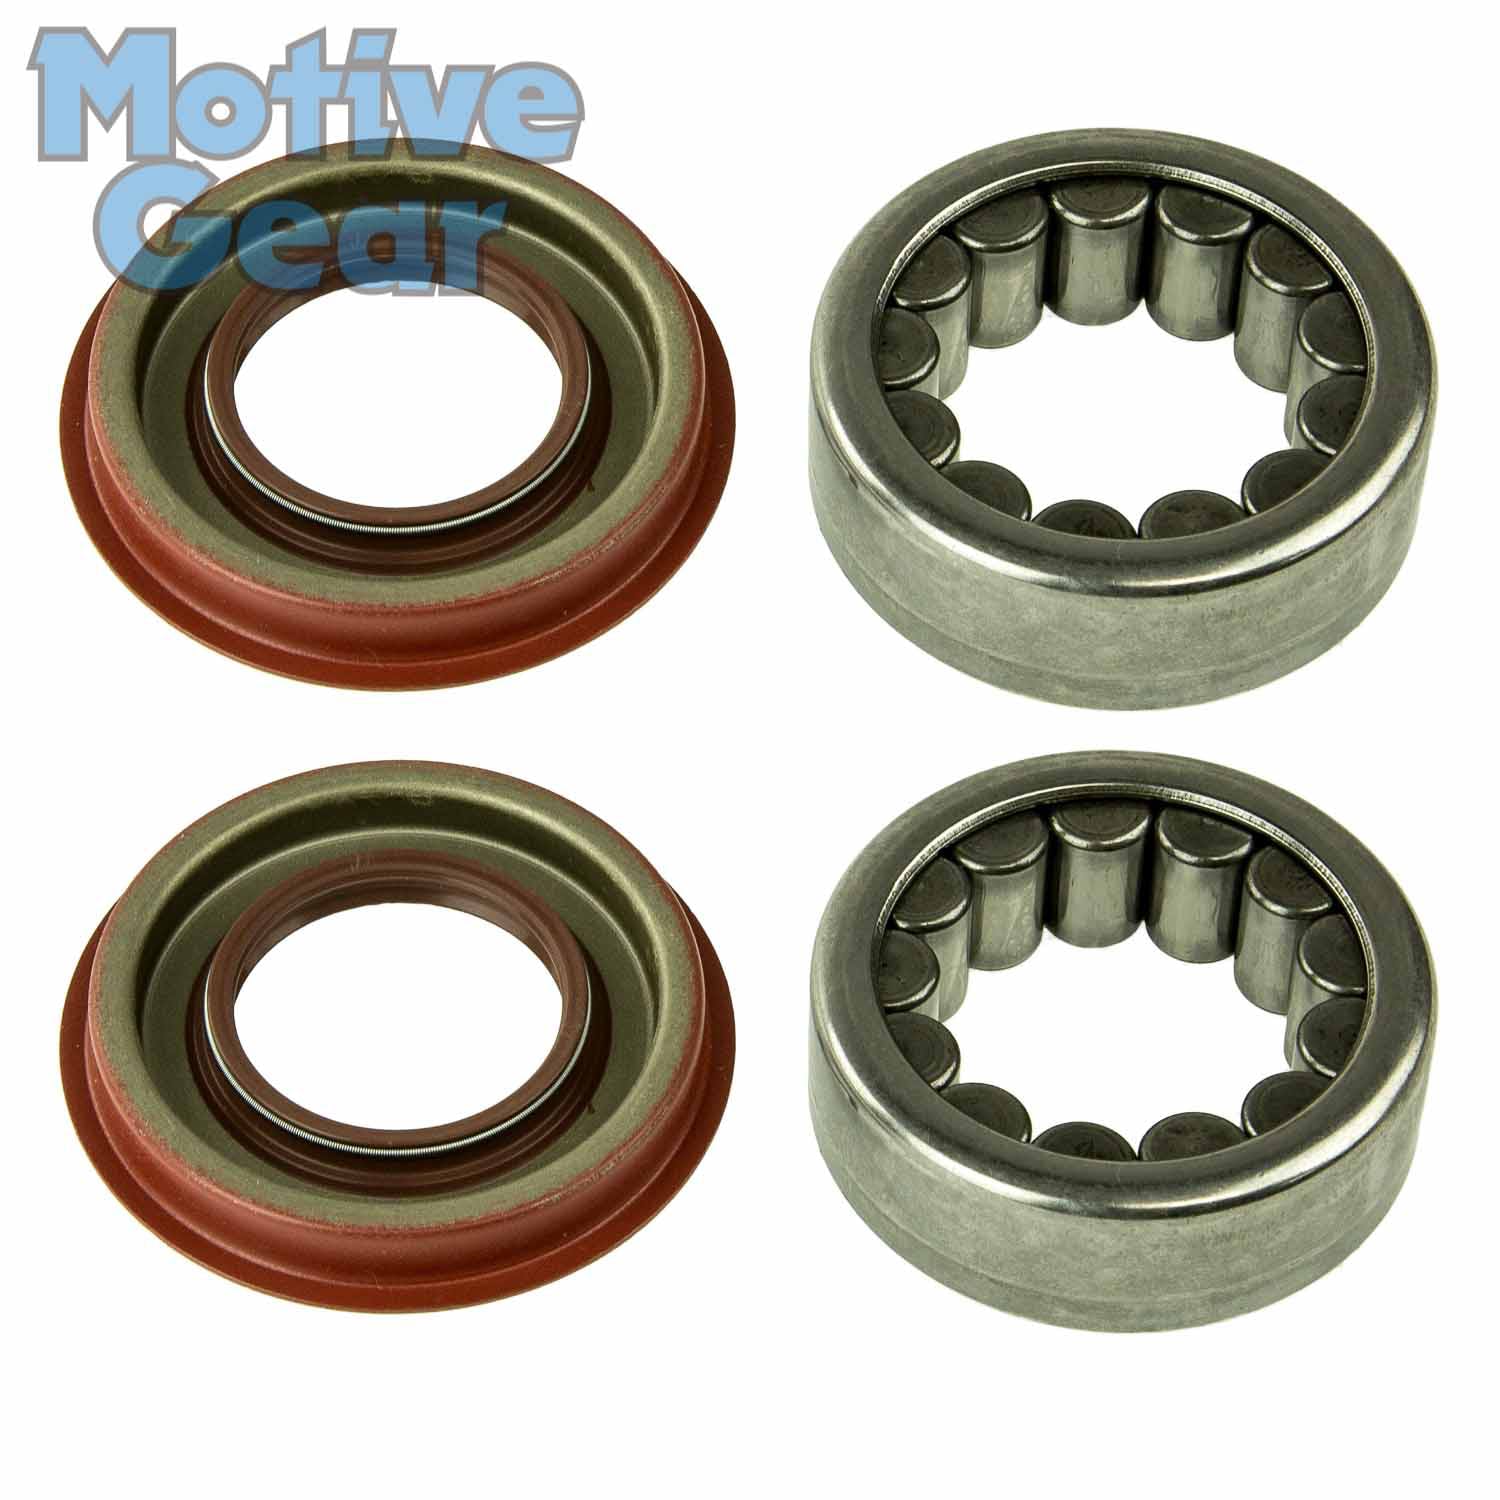 Motive Gear KIT 513023 Axle Bearing and Seal Kit